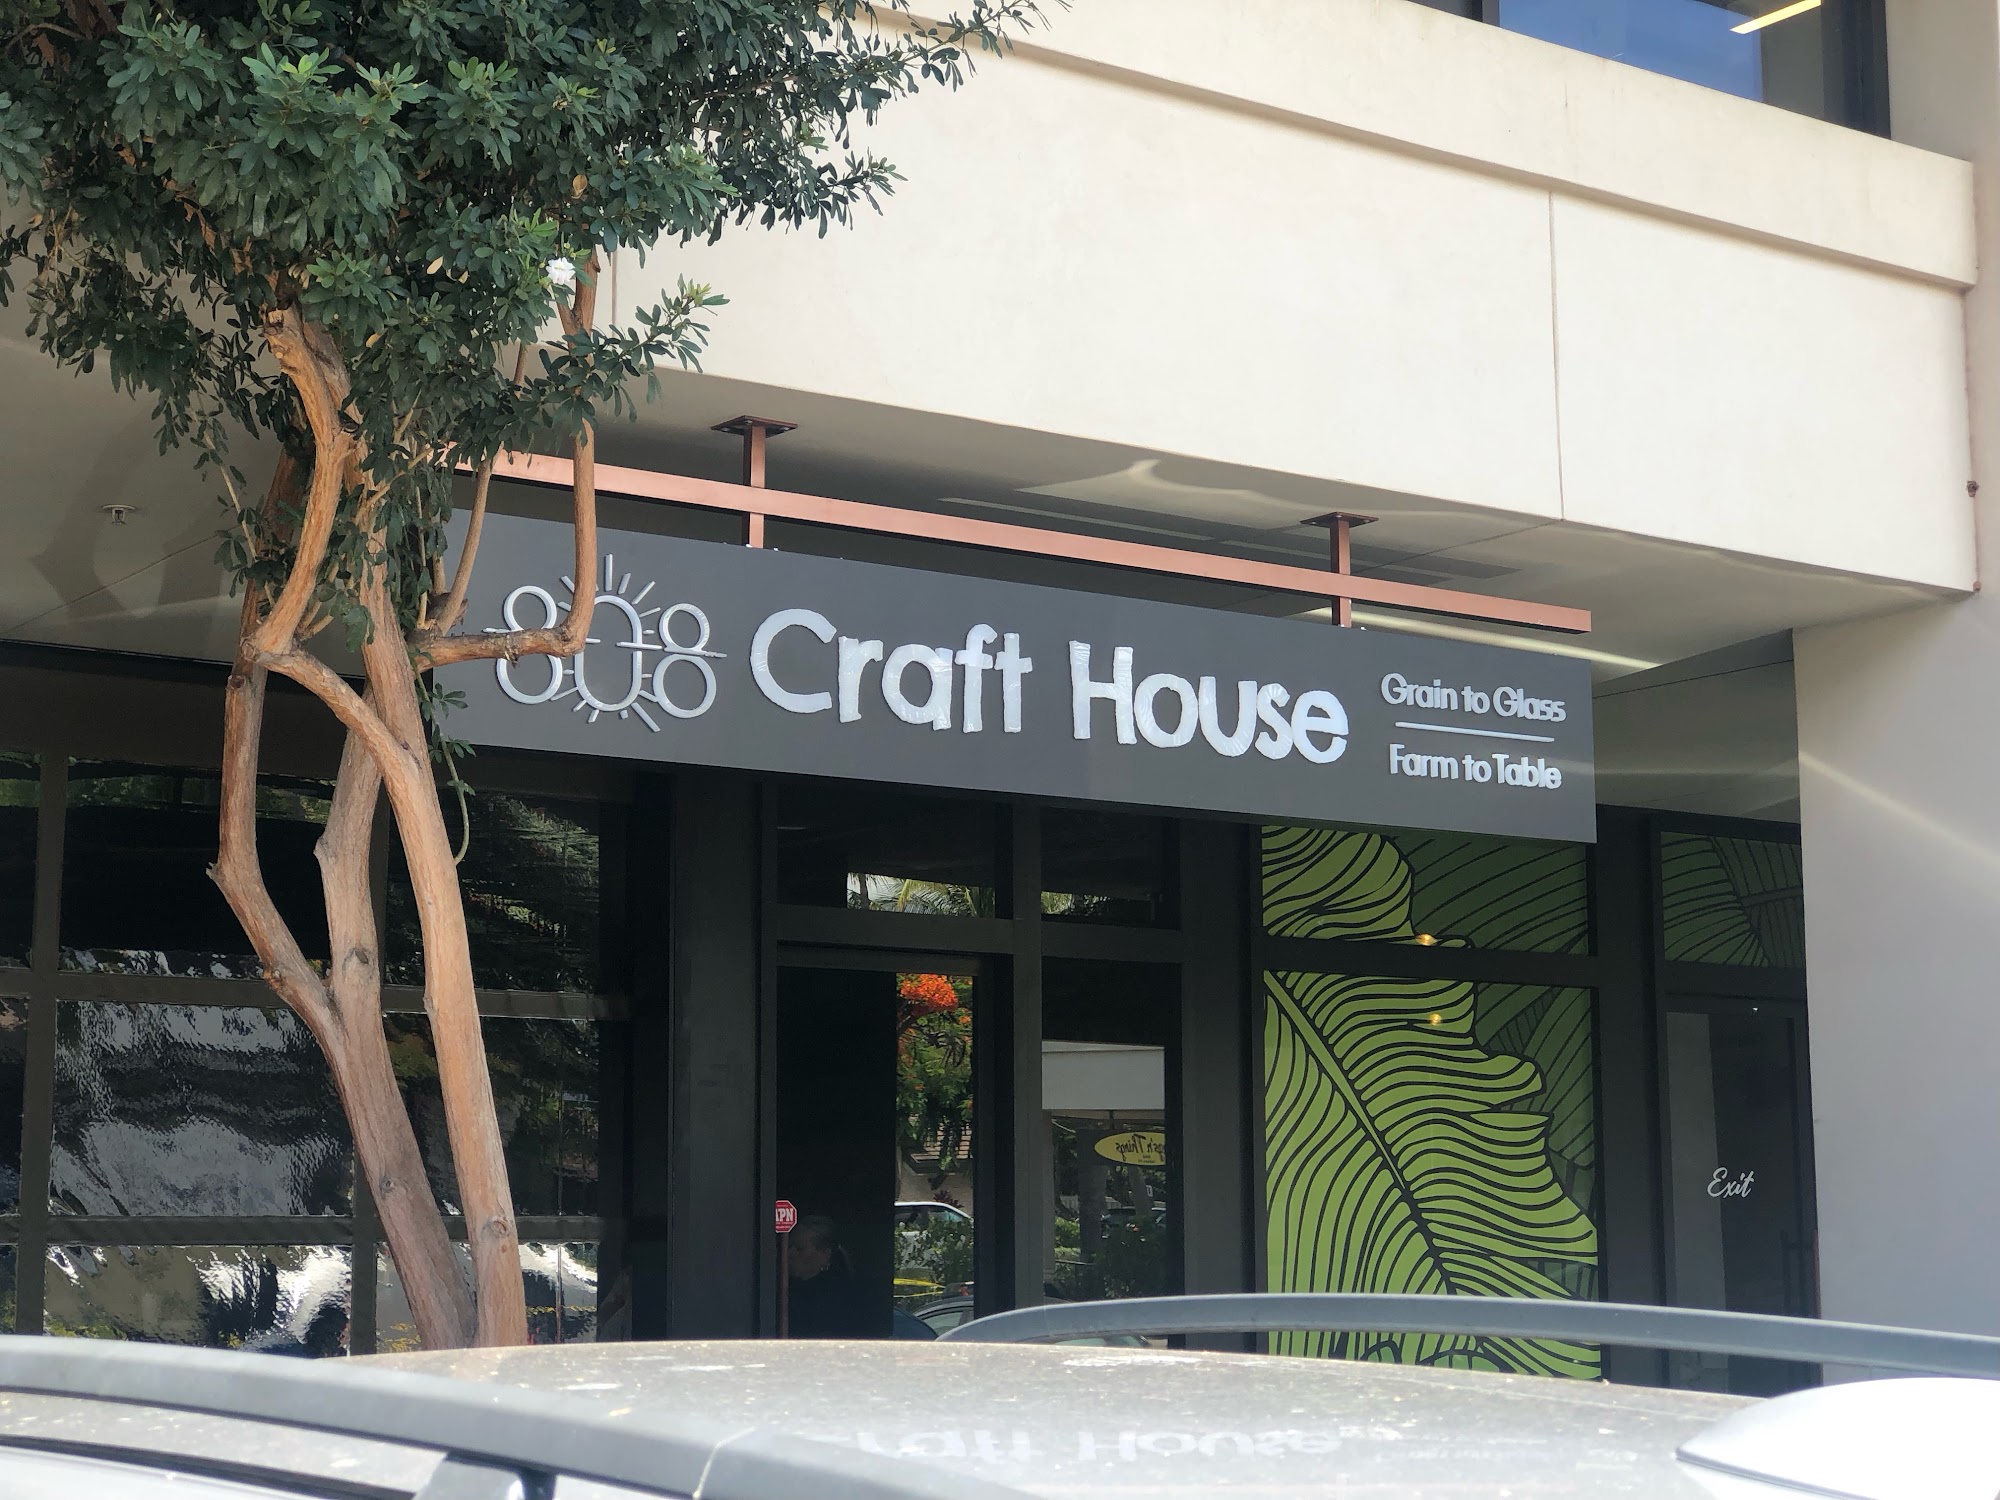 808 Craft House